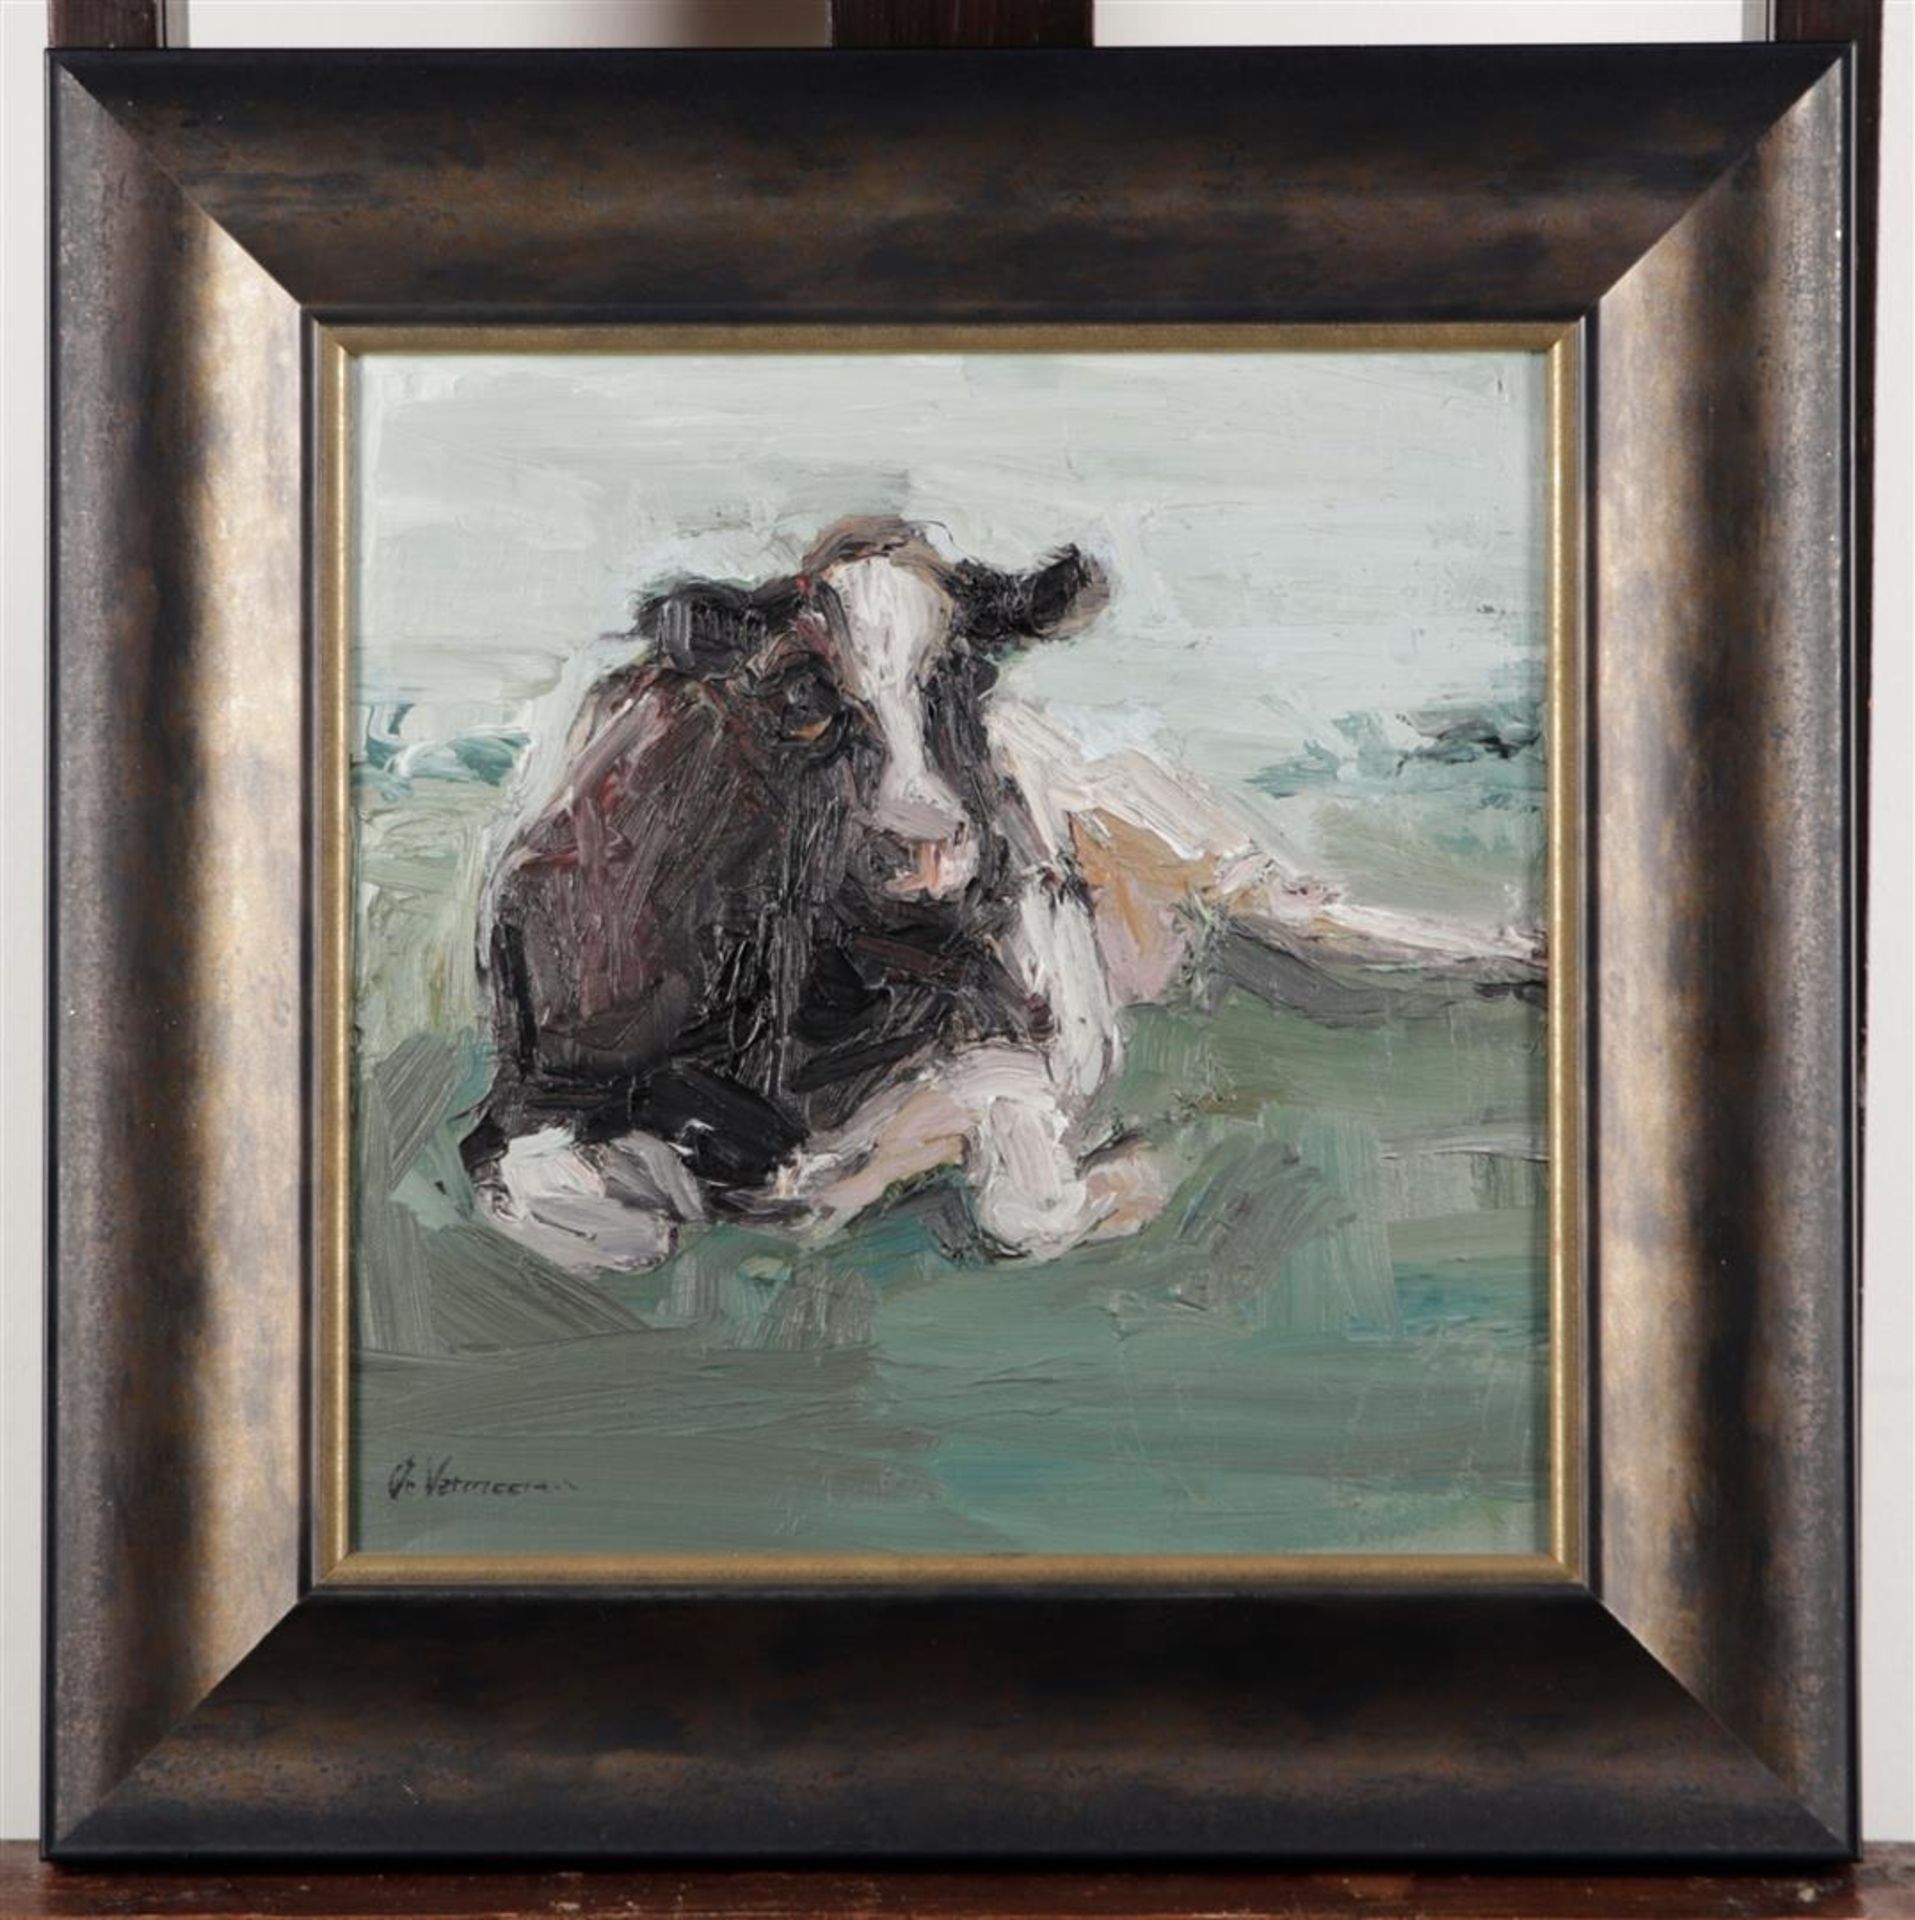 Anita Vermeeren (b.: 1967),Cow chewing the cud, oil on painter's board
30 x 30 cm. - Image 2 of 3